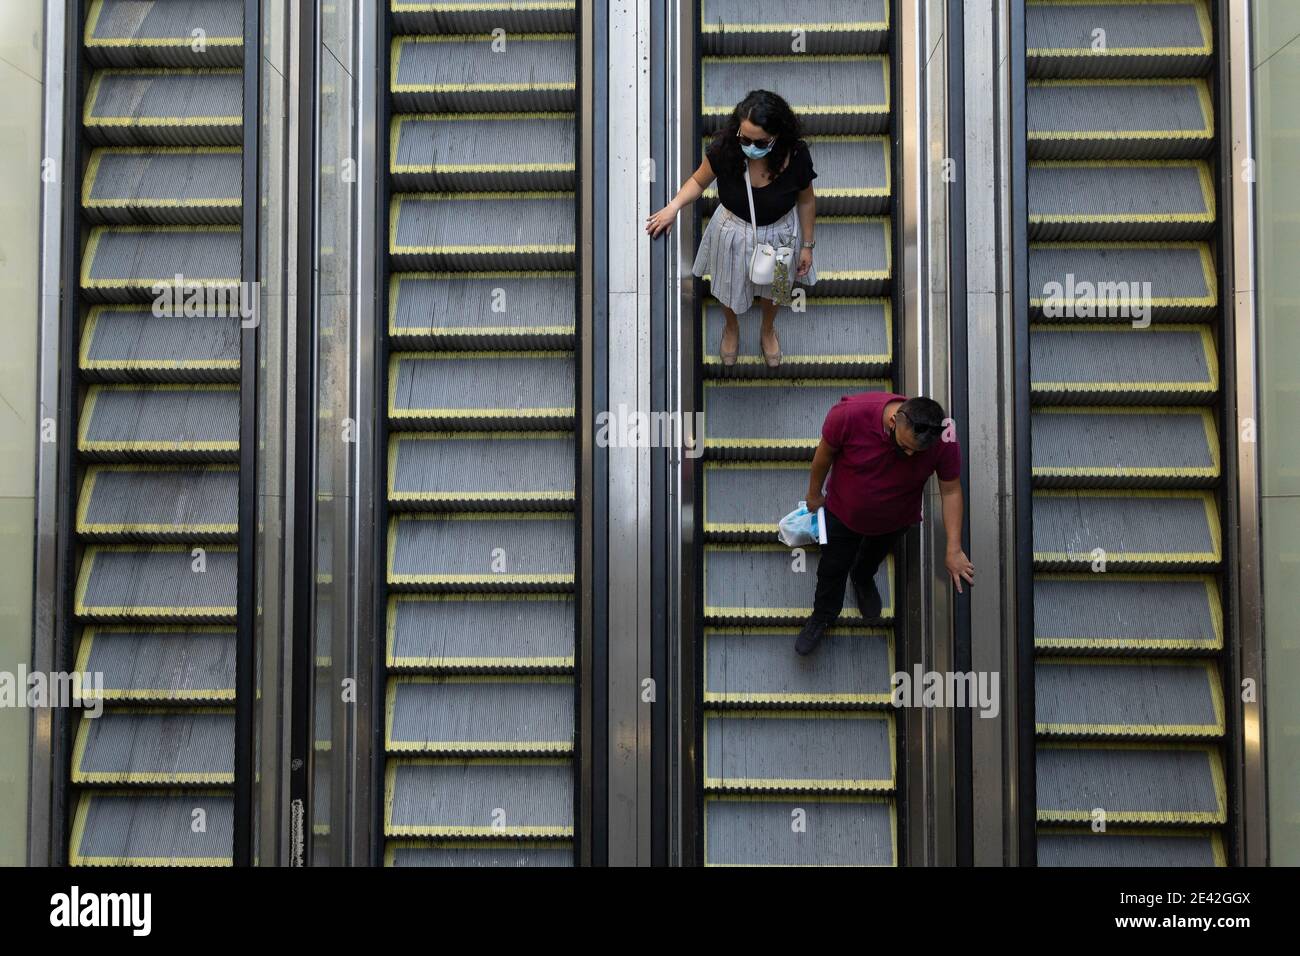 Santiago, Metropolitana, Chile. 21st Jan, 2021. Pedestrians wearing masks, uses the escalator of the Santiago metro, amid the coronavirus pandemic. Credit: Matias Basualdo/ZUMA Wire/Alamy Live News Stock Photo